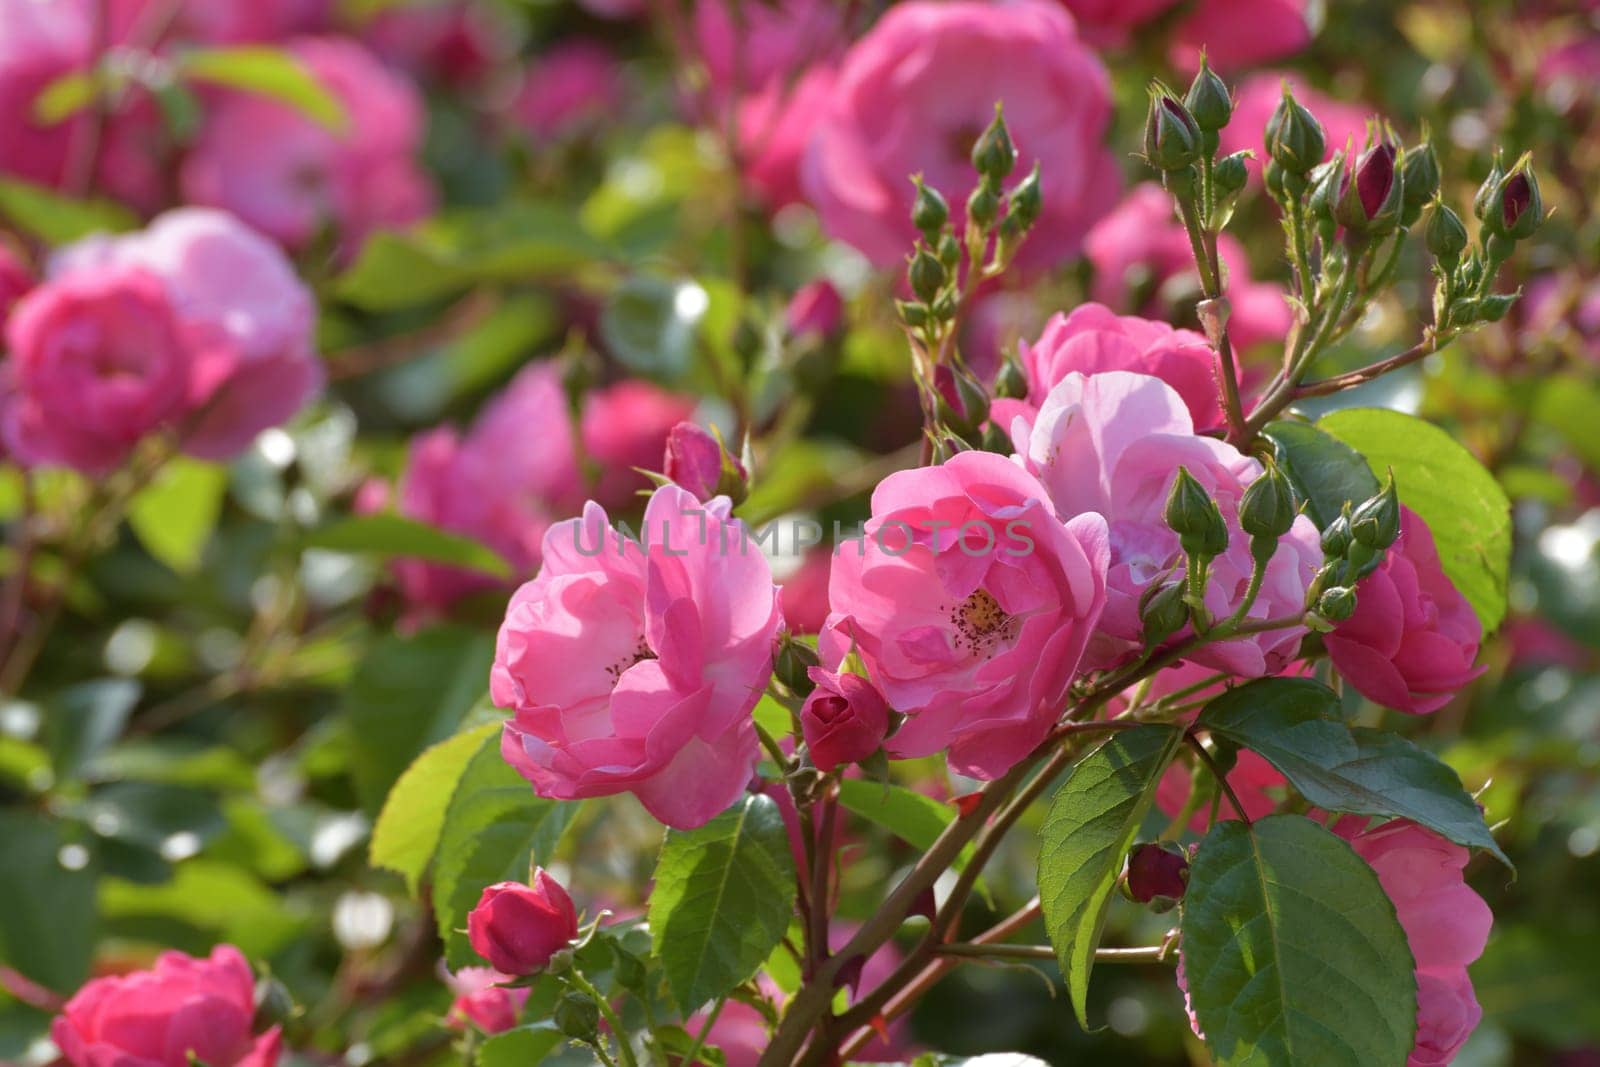 Bushy pink rose blooming profusely